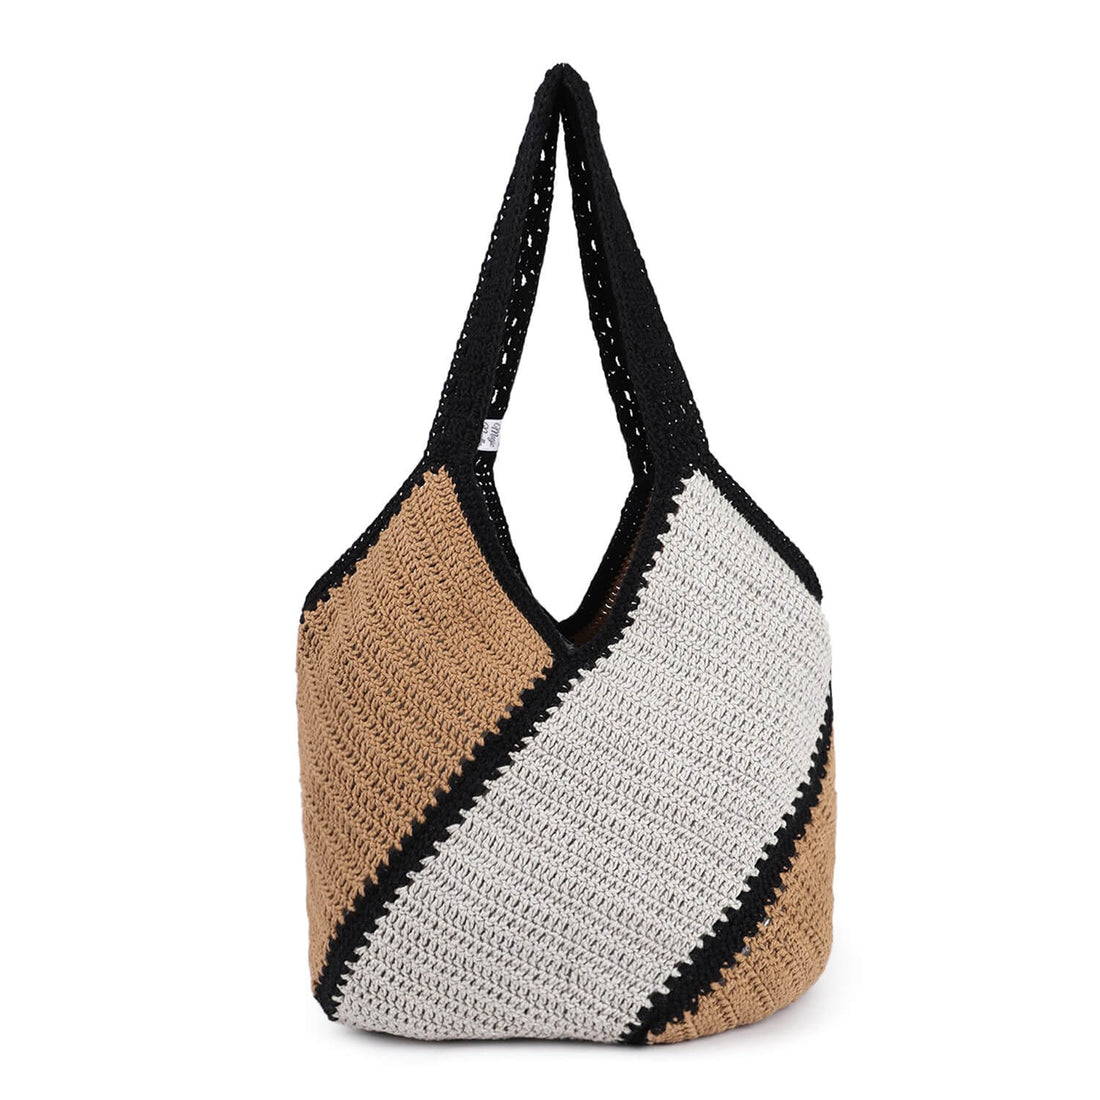 Handmade Crochet Market Bag - Black, Grey, Brown 2930